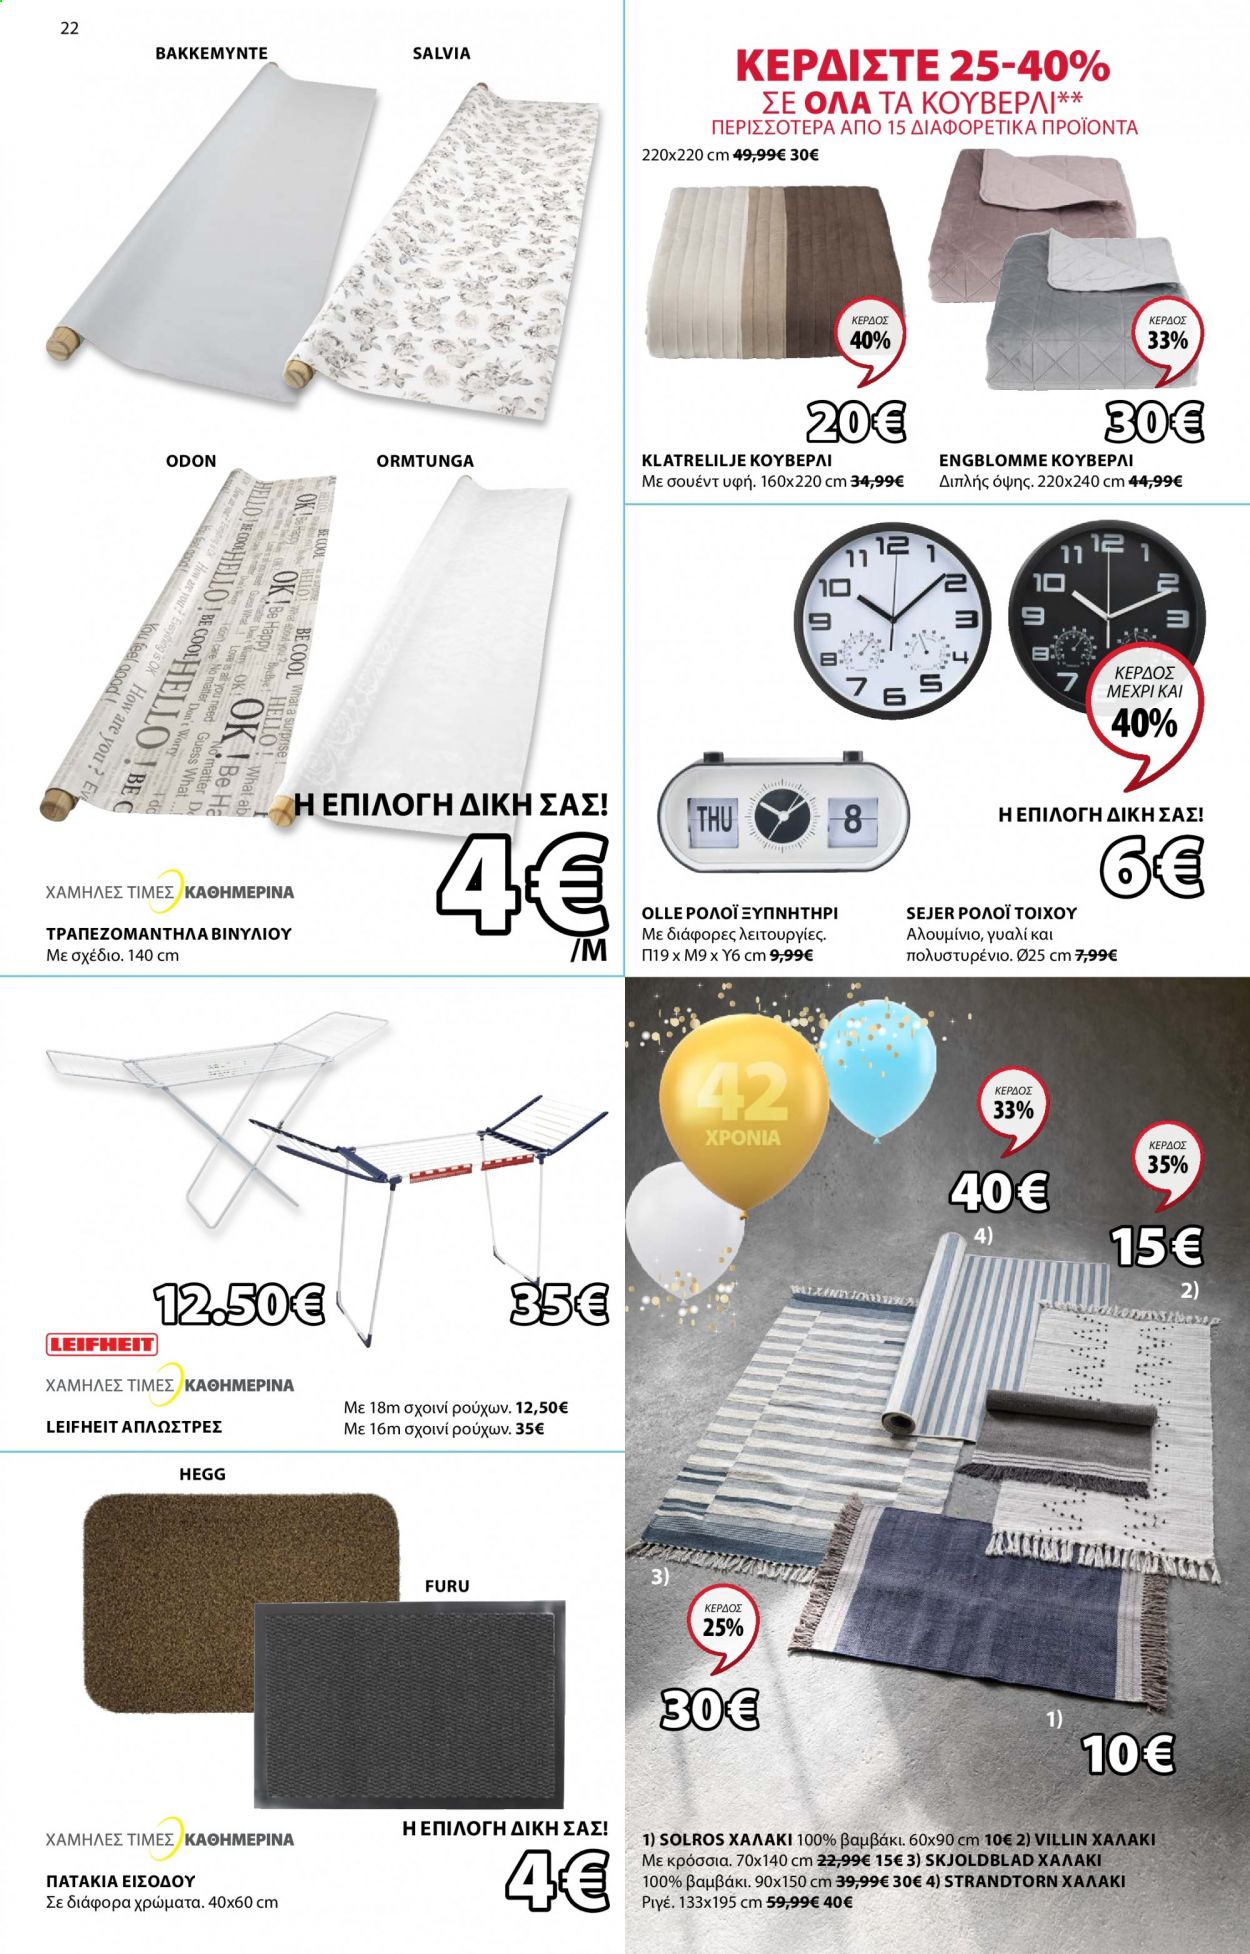 thumbnail - Φυλλάδια JYSK - 08.04.2021 - 21.04.2021 - Εκπτωτικά προϊόντα - ρολόι, τραπεζομάντηλα. Σελίδα 22.